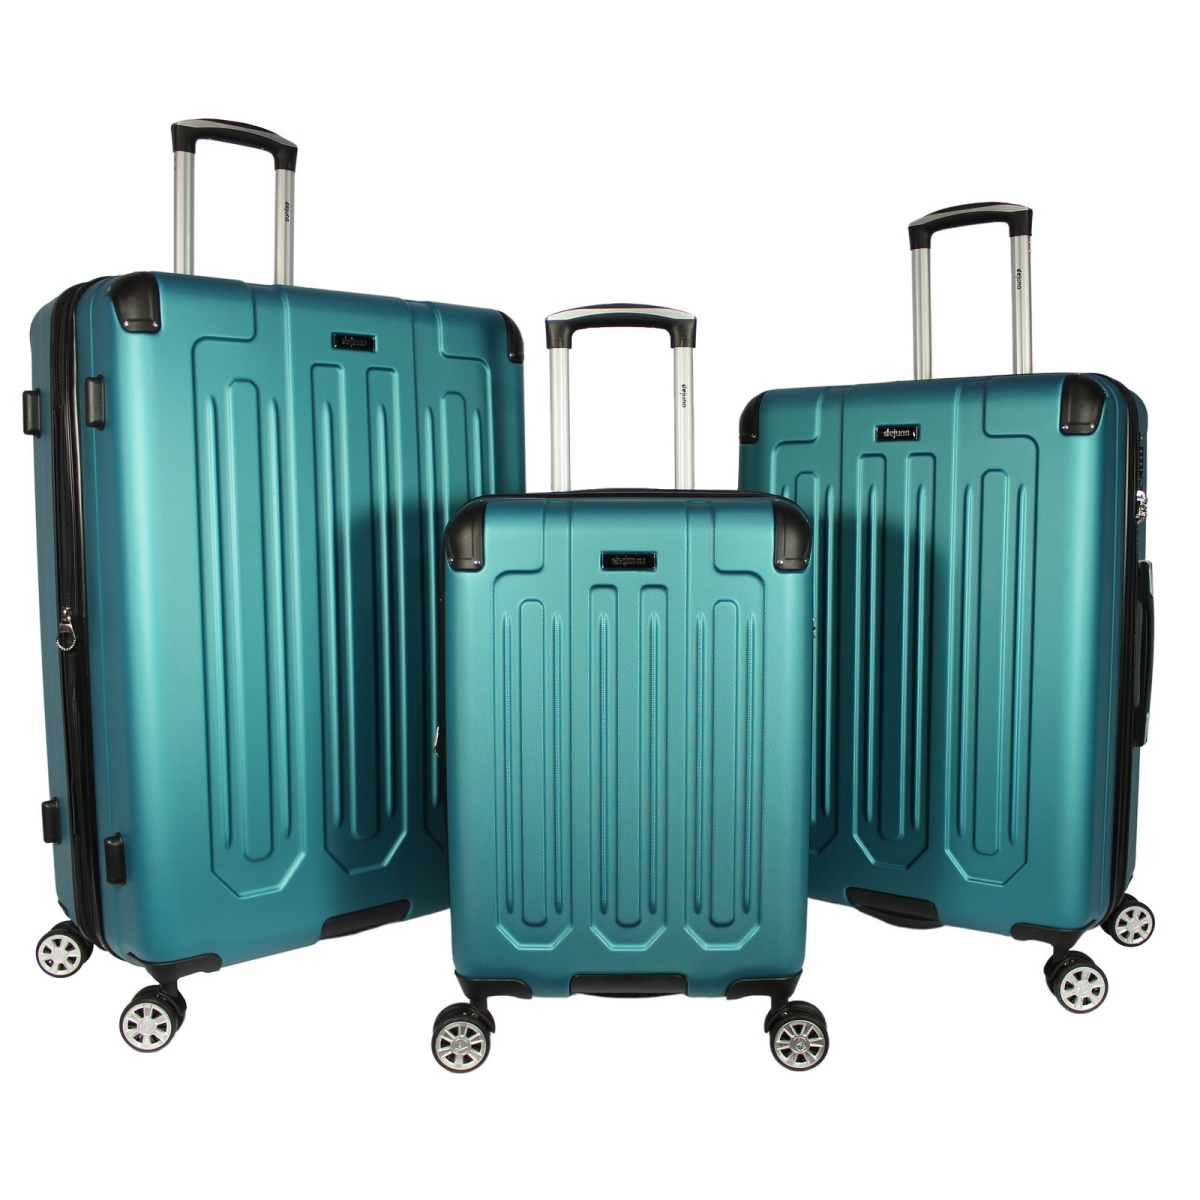 Picture of Dejuno 252015DJ-TURQUOISE Tutin Hardside Spinner Luggage Set with TSA Lock, Turquoise - 3 Piece